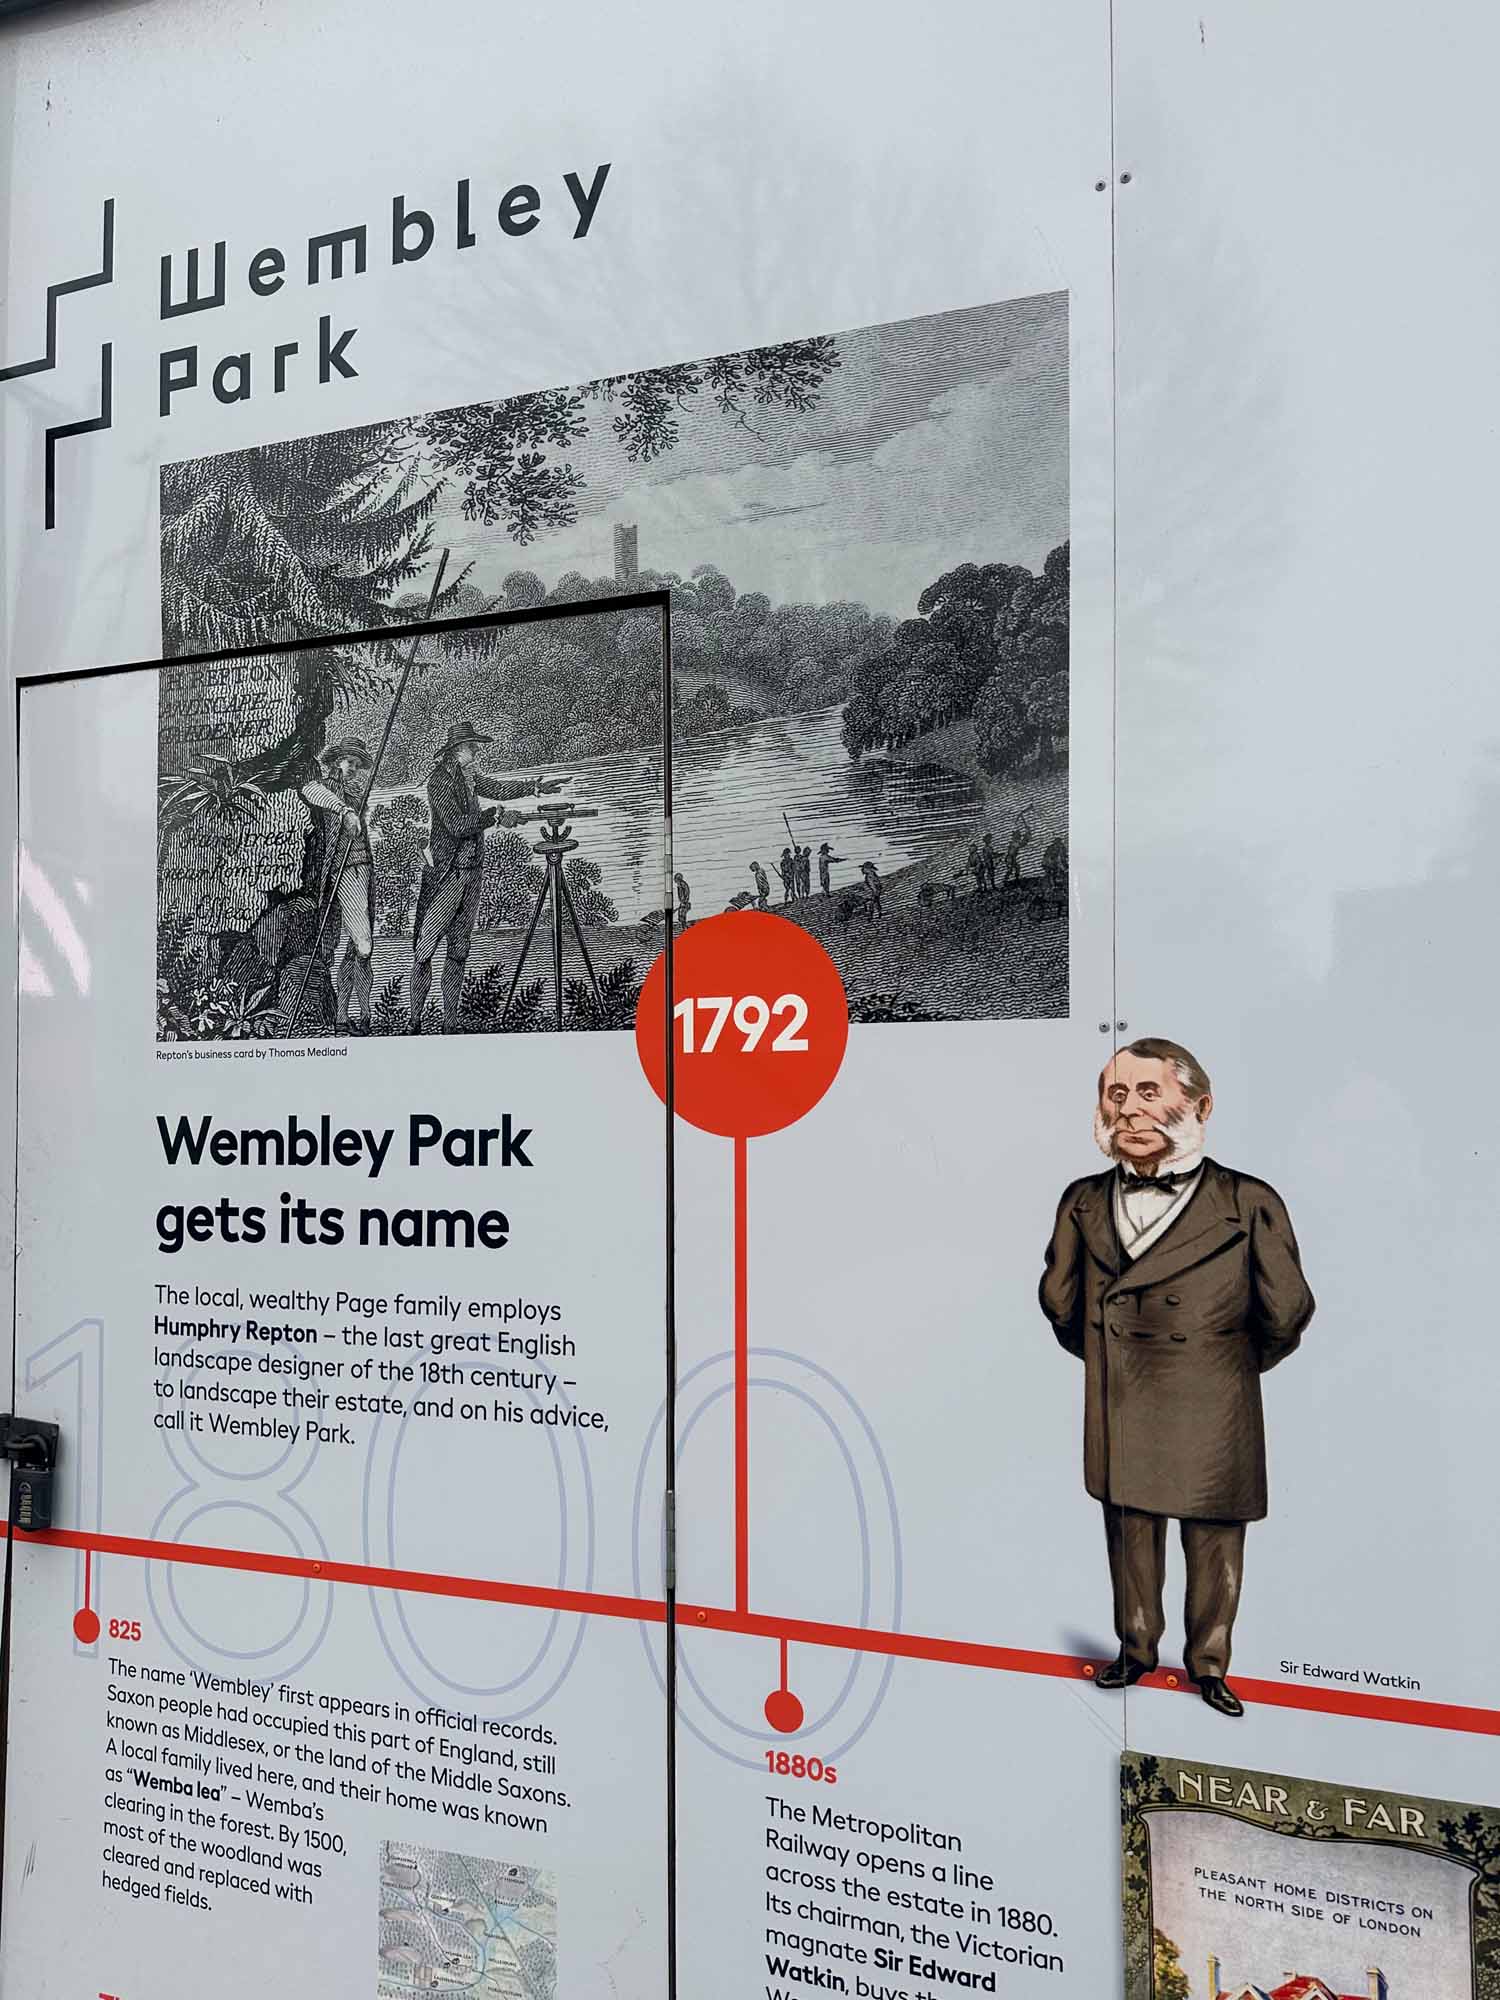 Wembley Park gets its name